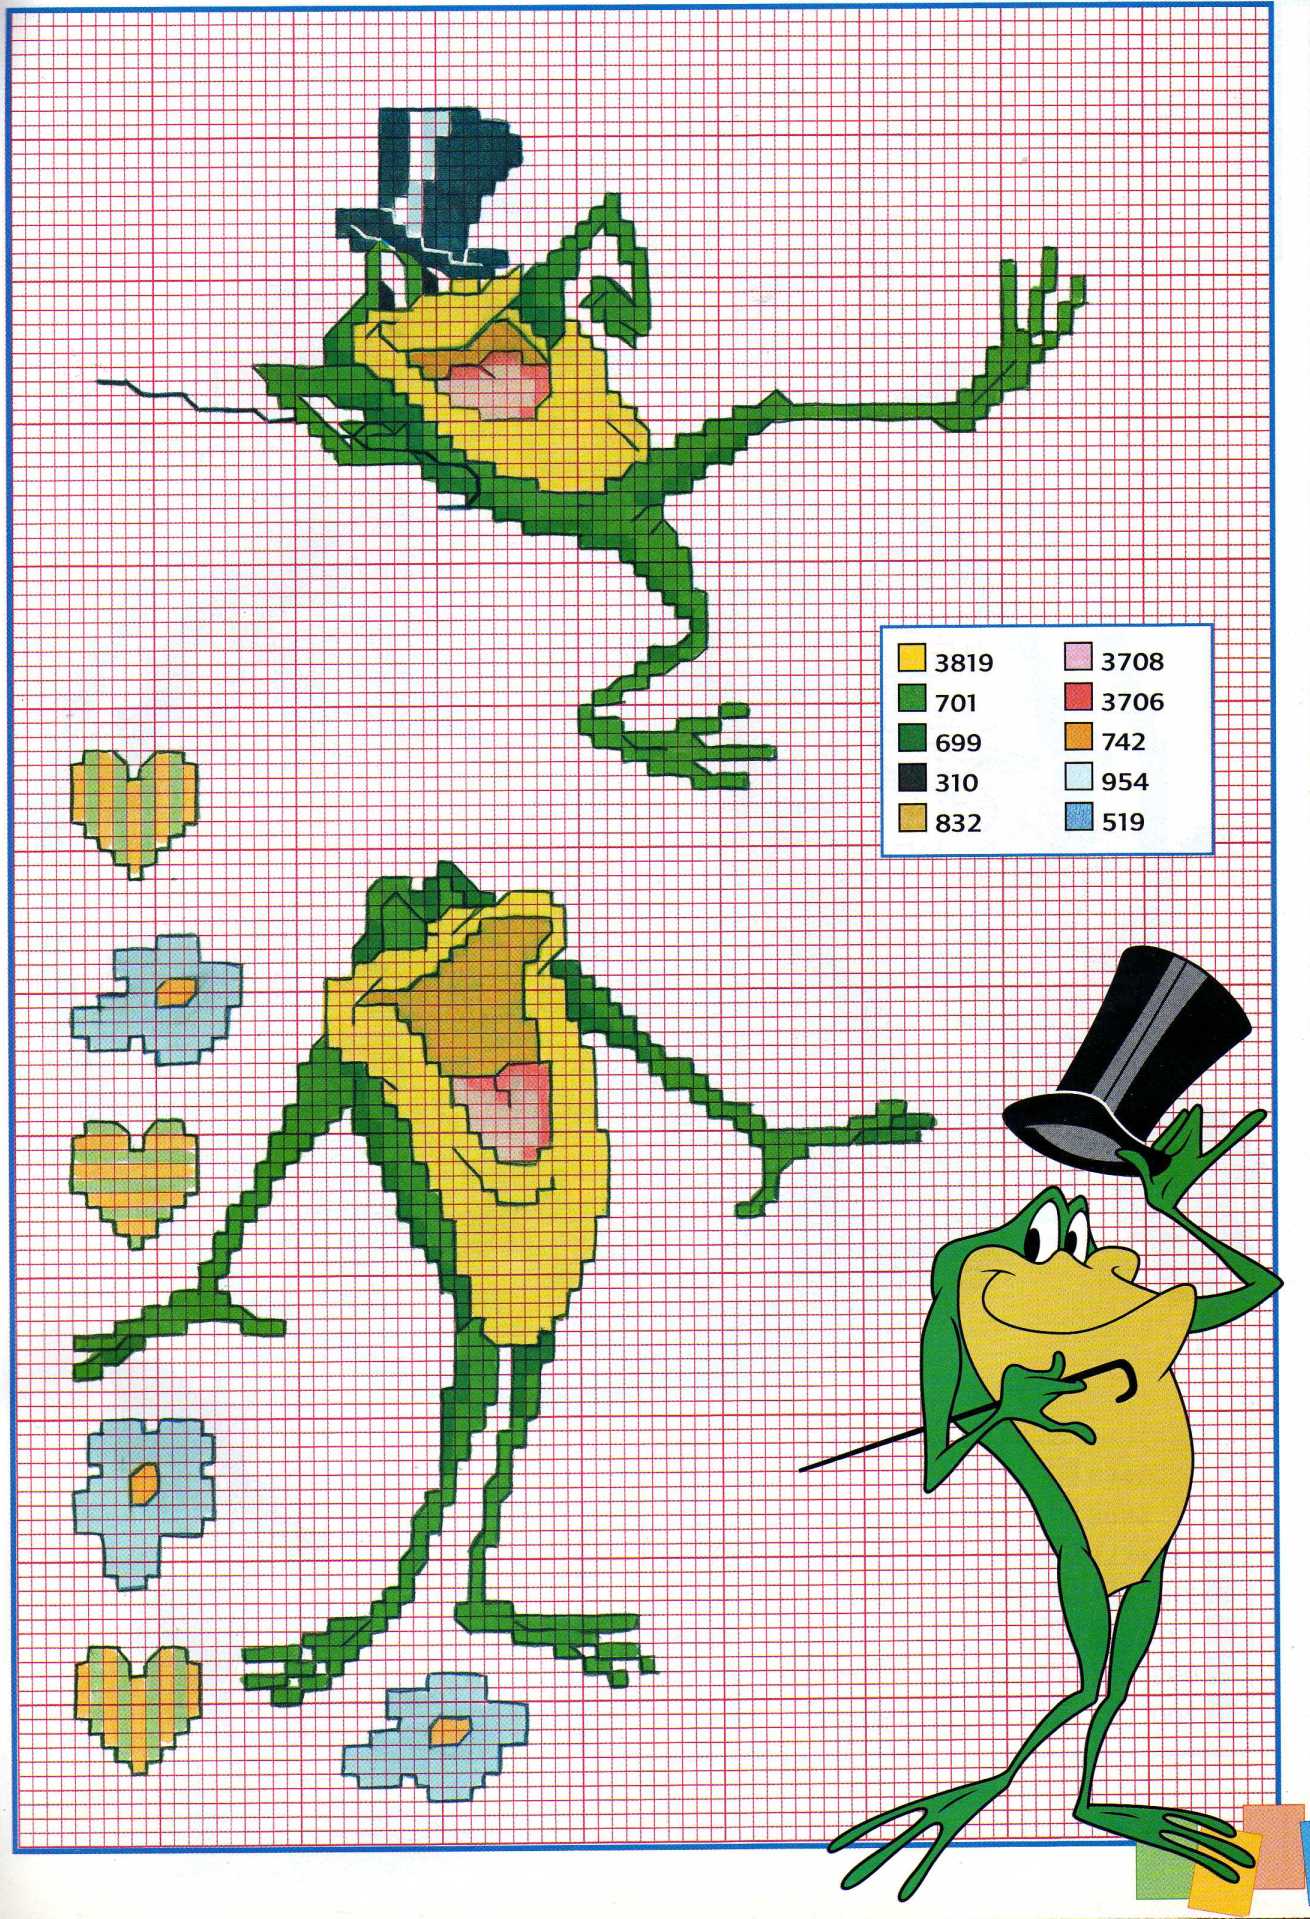 Michigan J Frog cross stitch patterns (2)